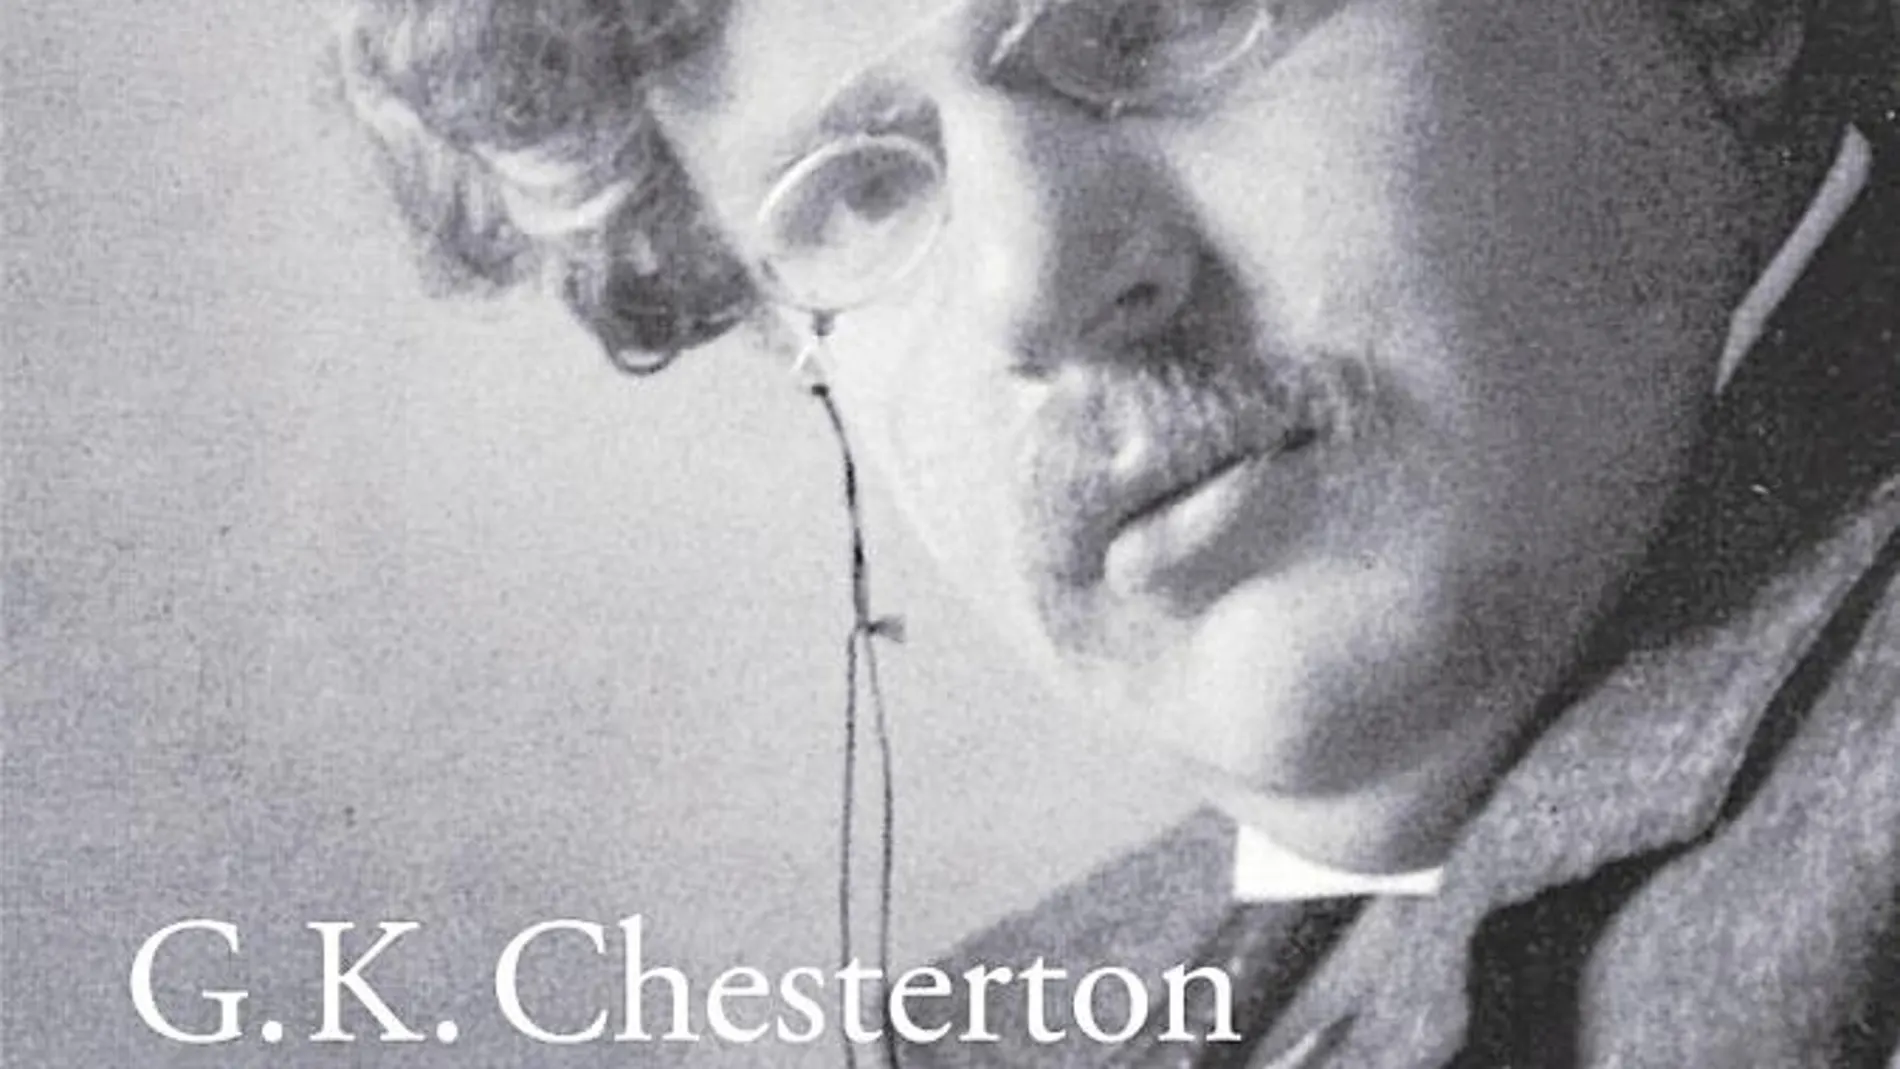 Chesterton, el frívolo treintañero